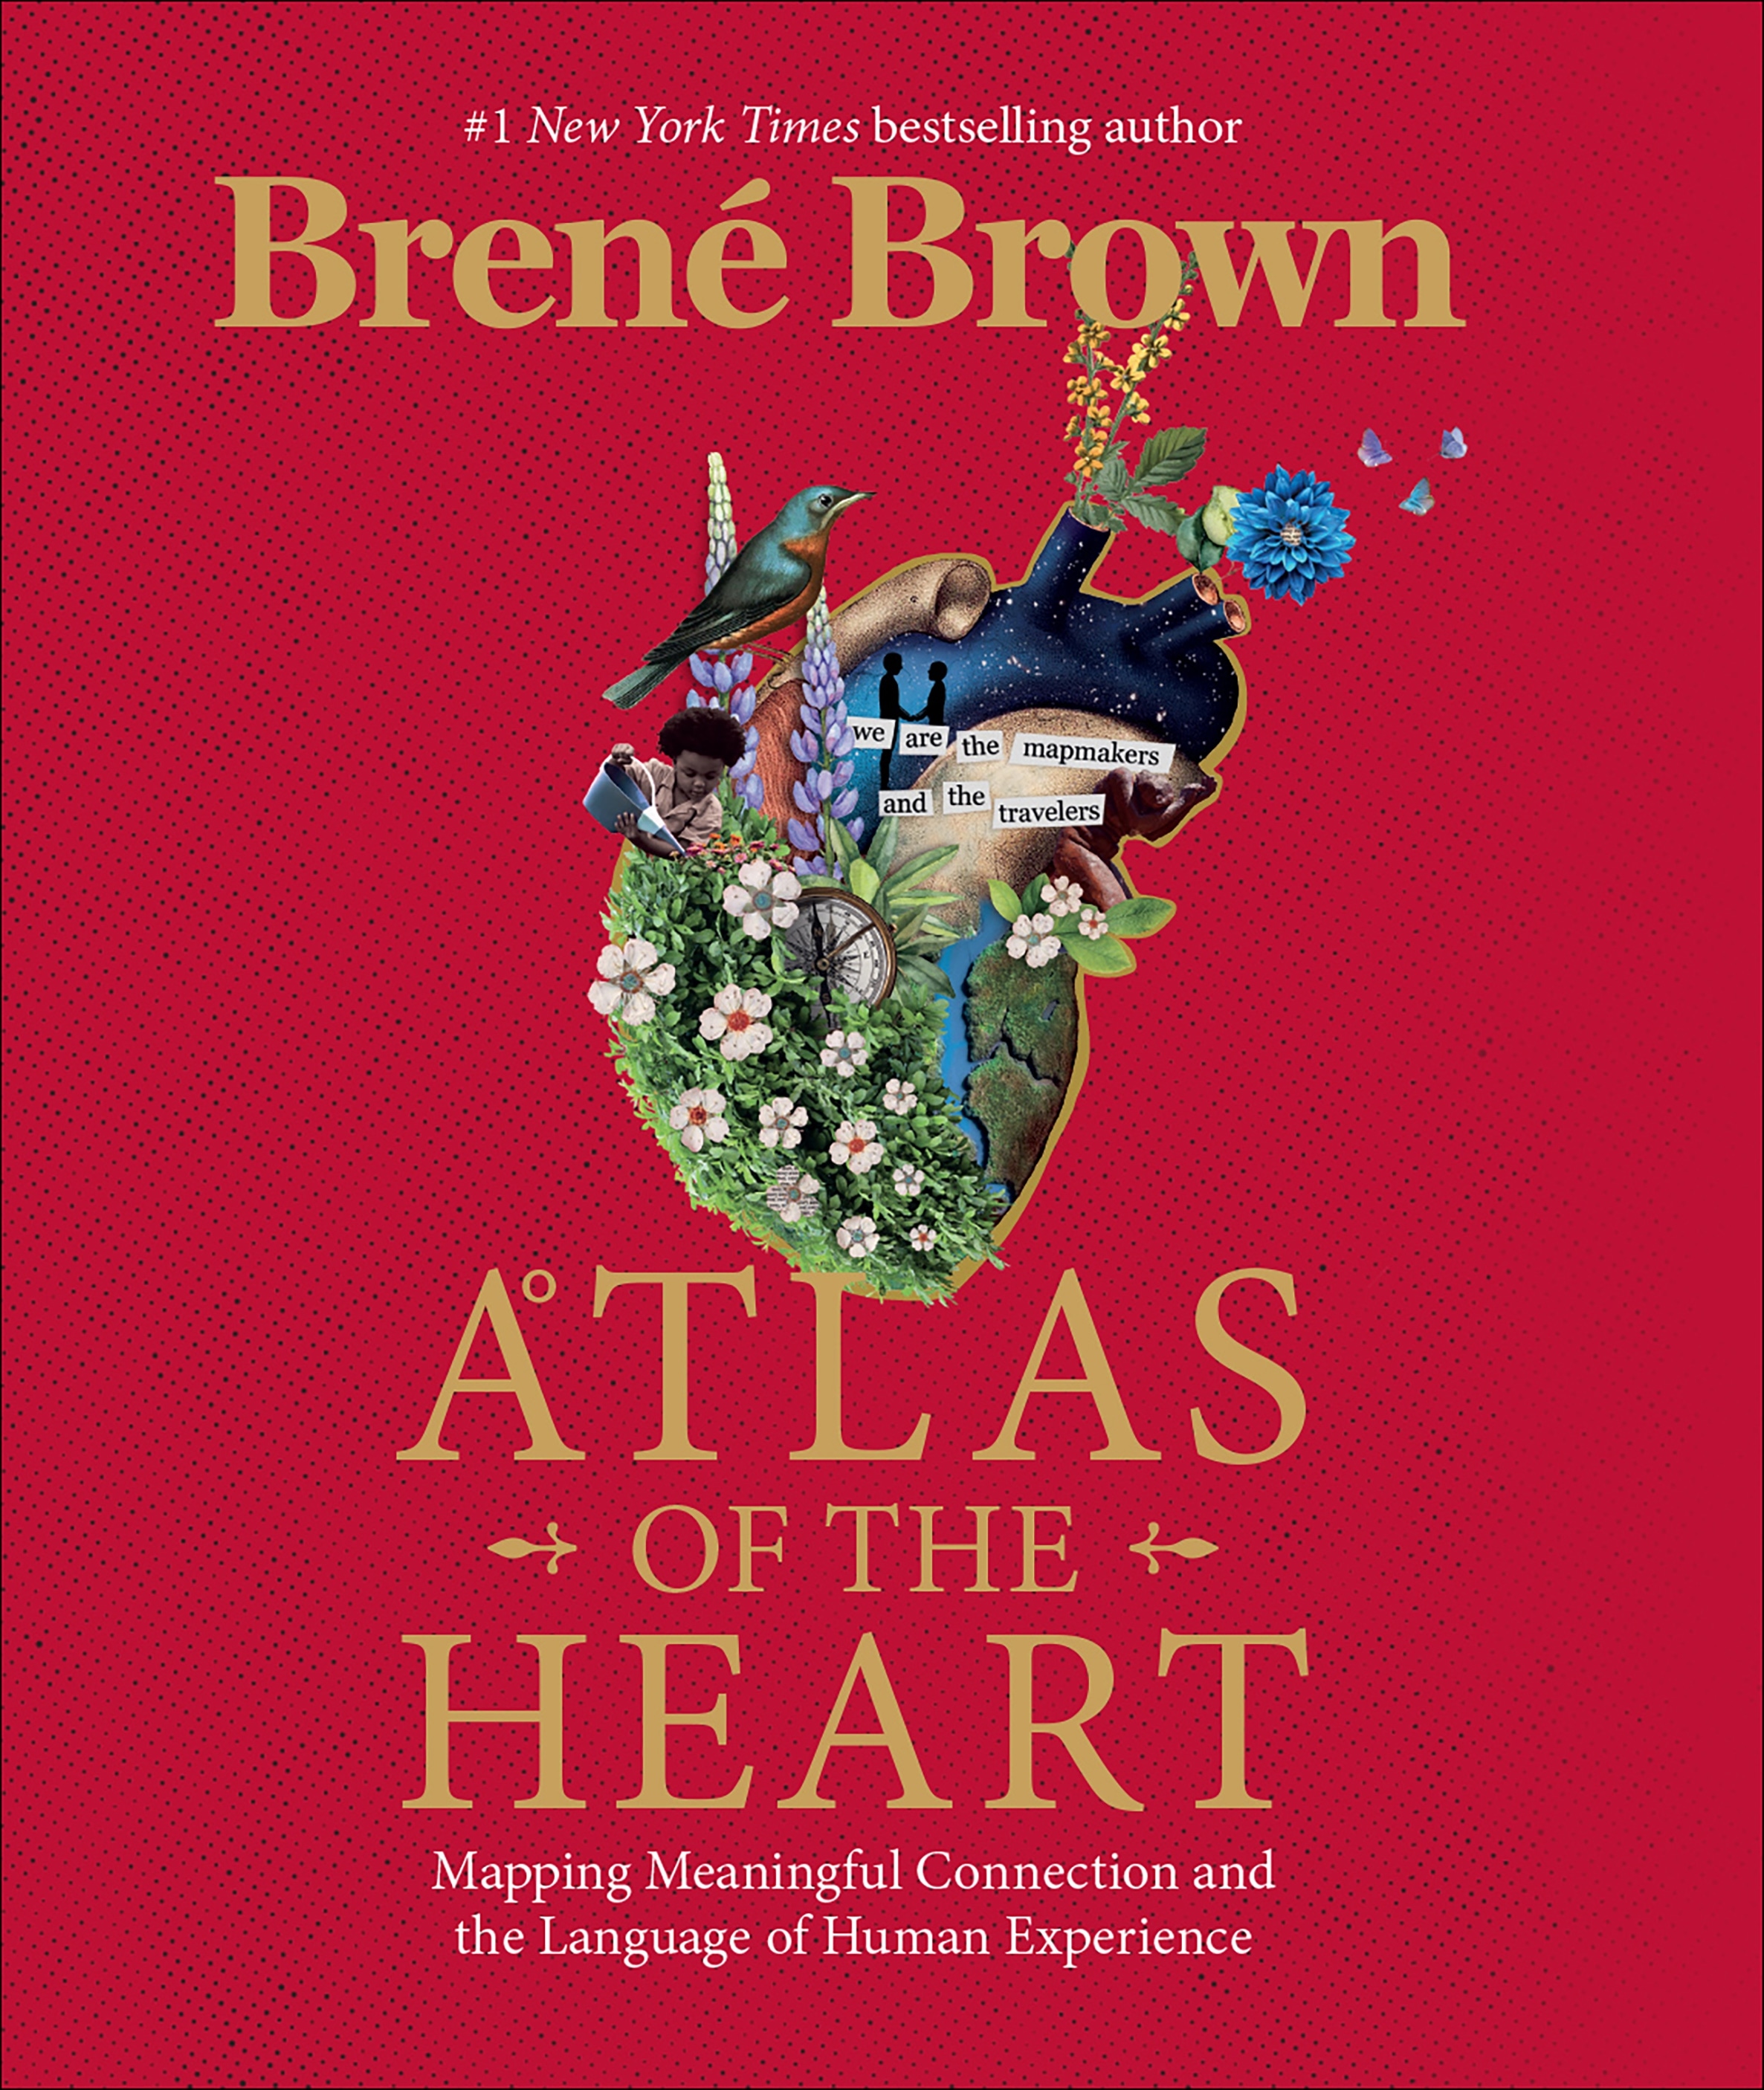 Book “Atlas of the Heart” by Brené Brown — November 30, 2021